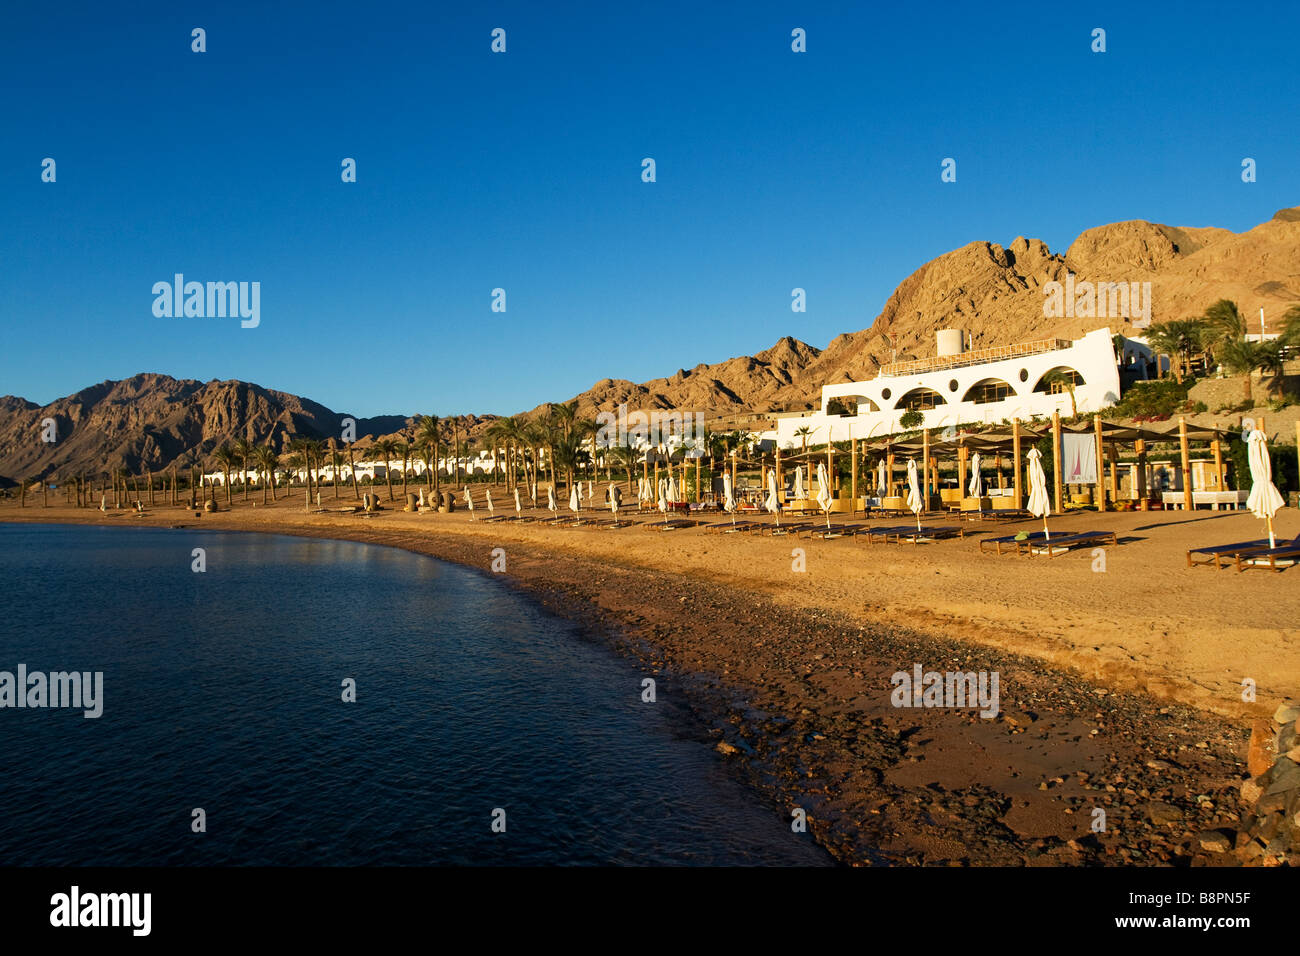 La spiaggia di Le Méridien Hotel & Resort di Dahab, Egitto Foto Stock